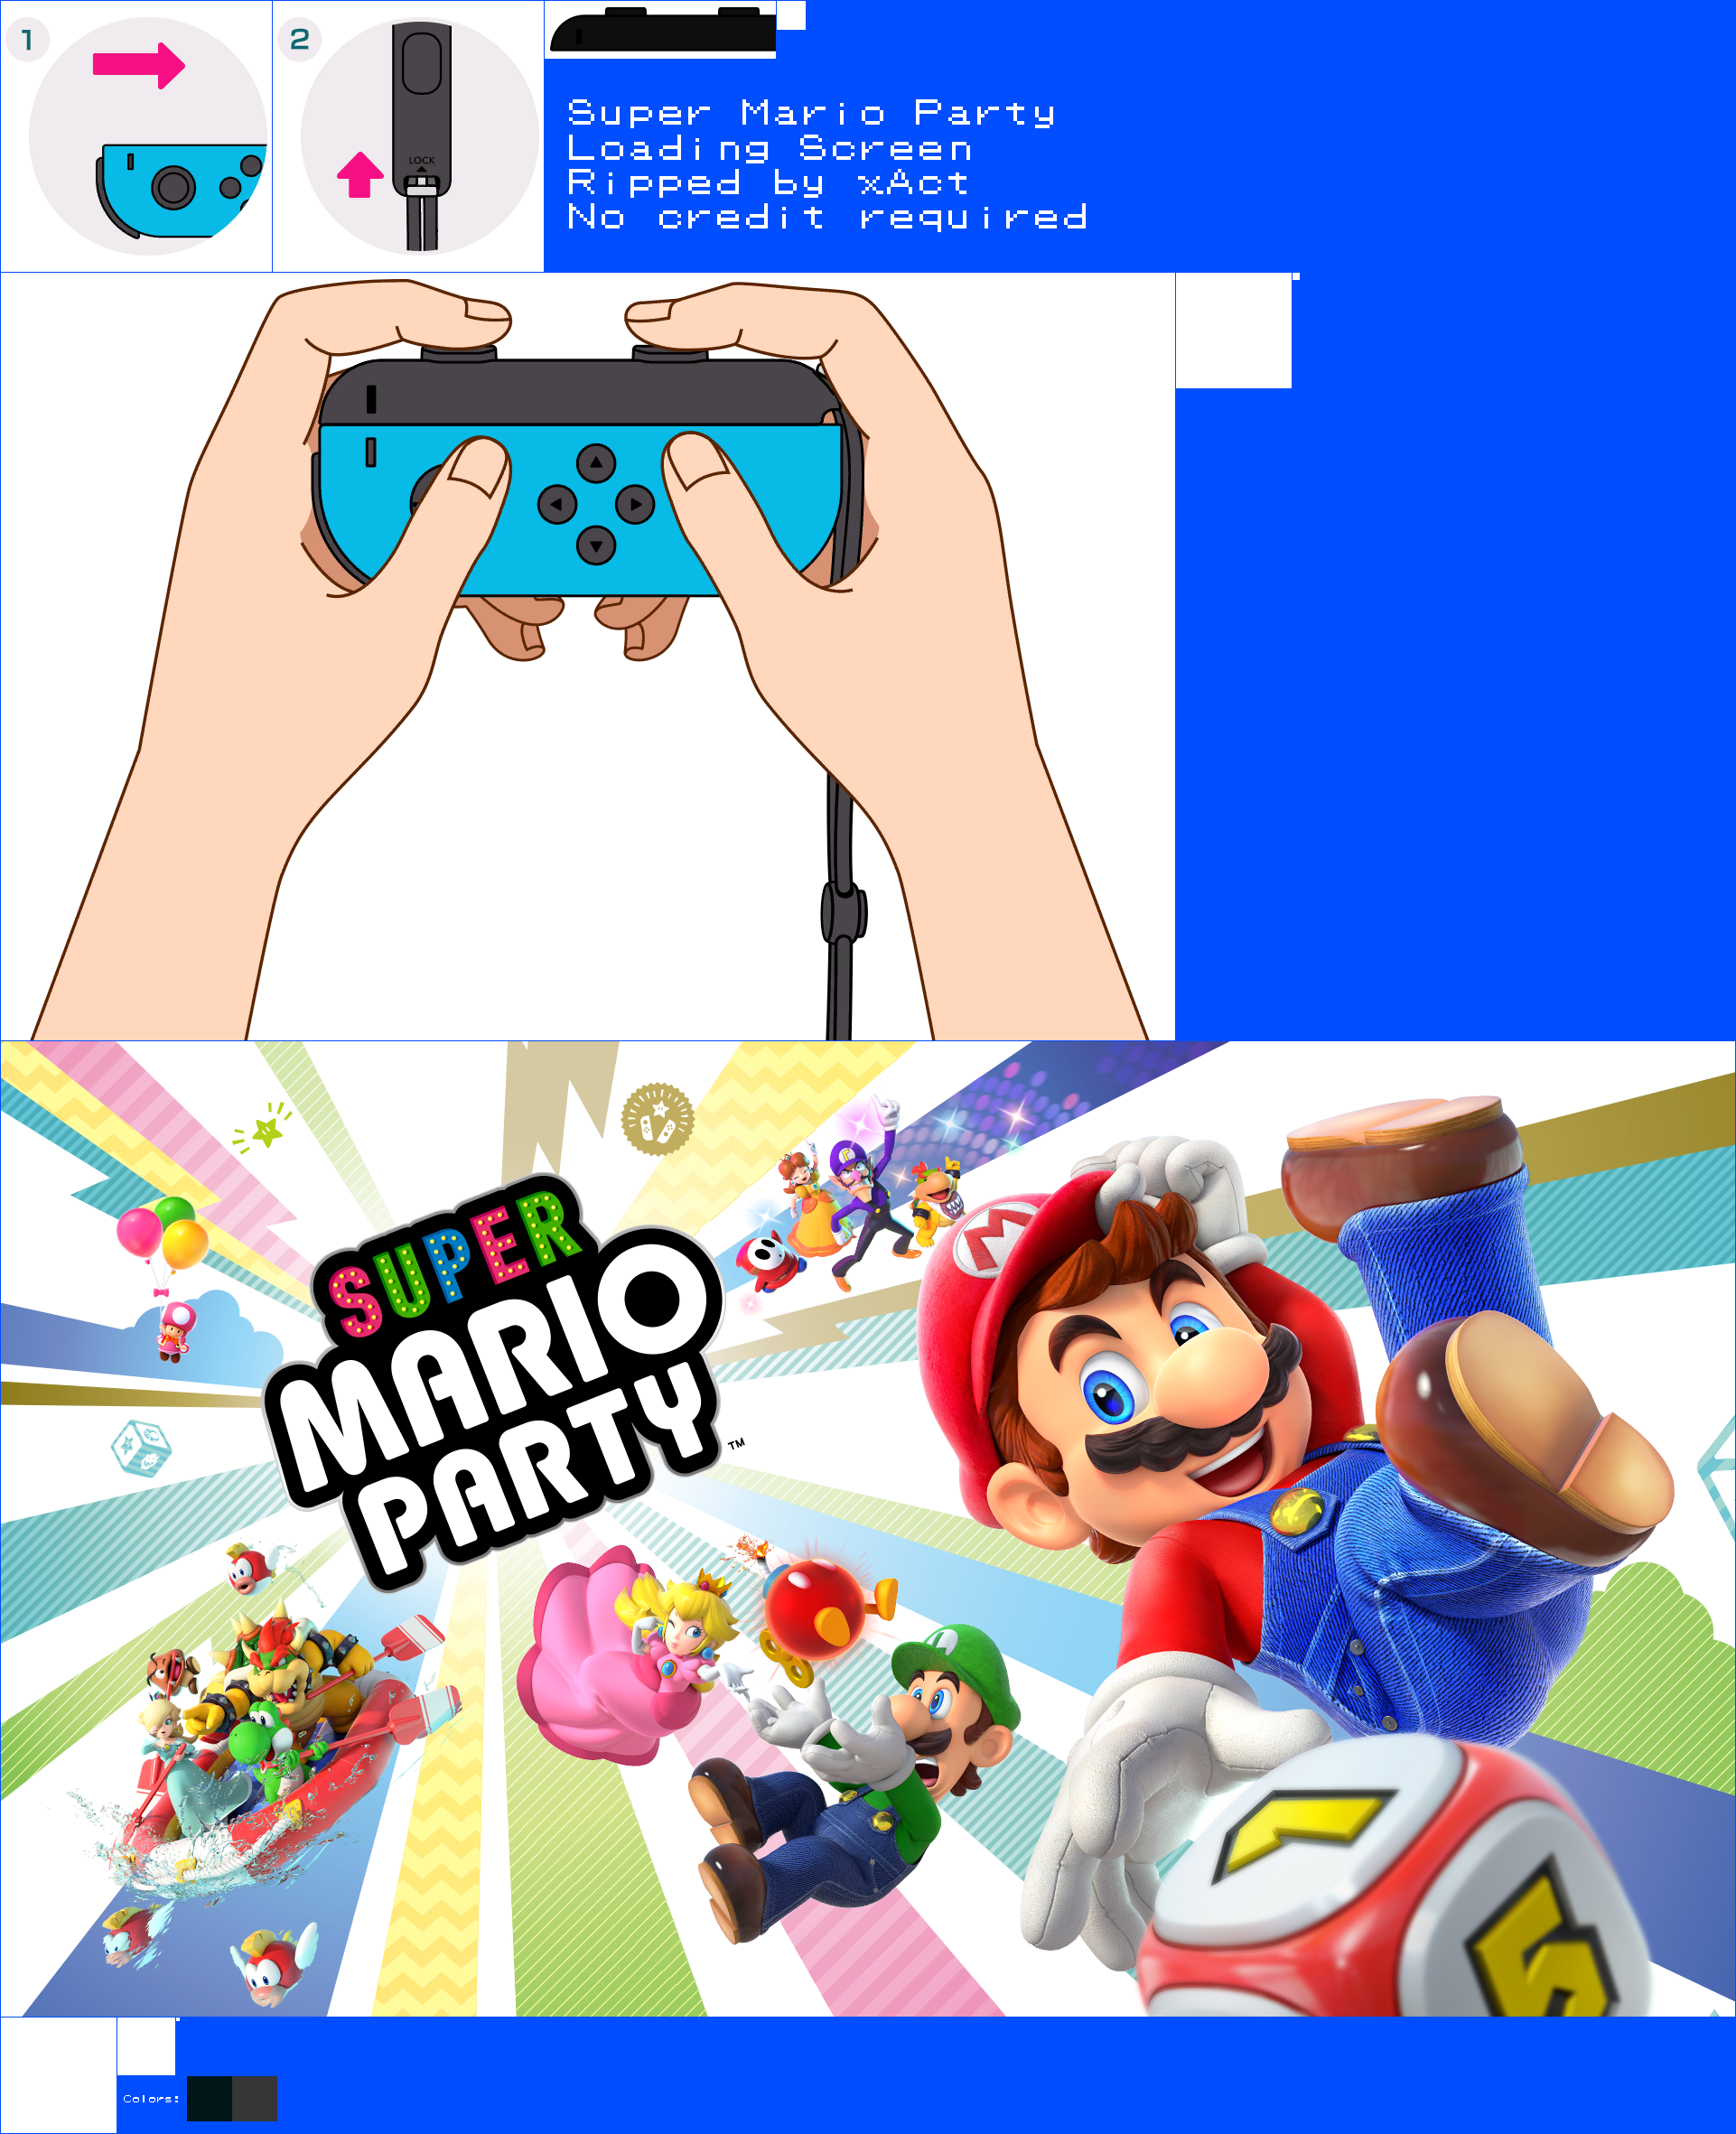 Super Mario Party - Loading Screen